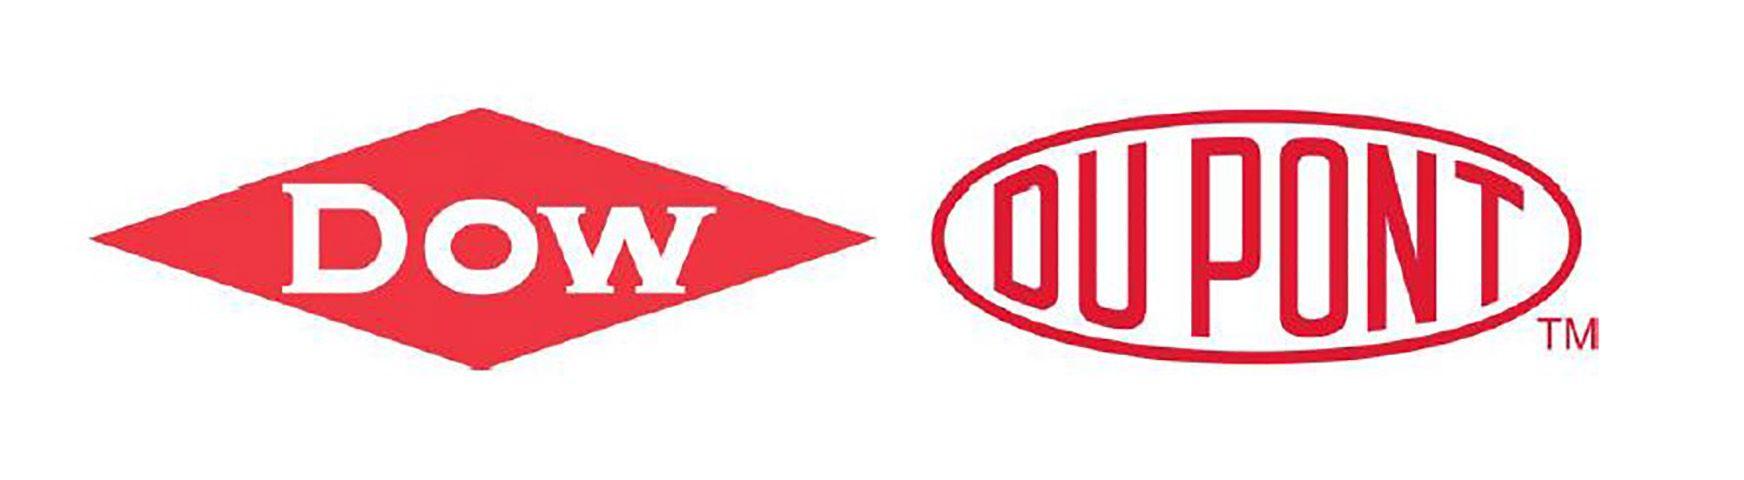 Dow Logo - Dow DuPont logos